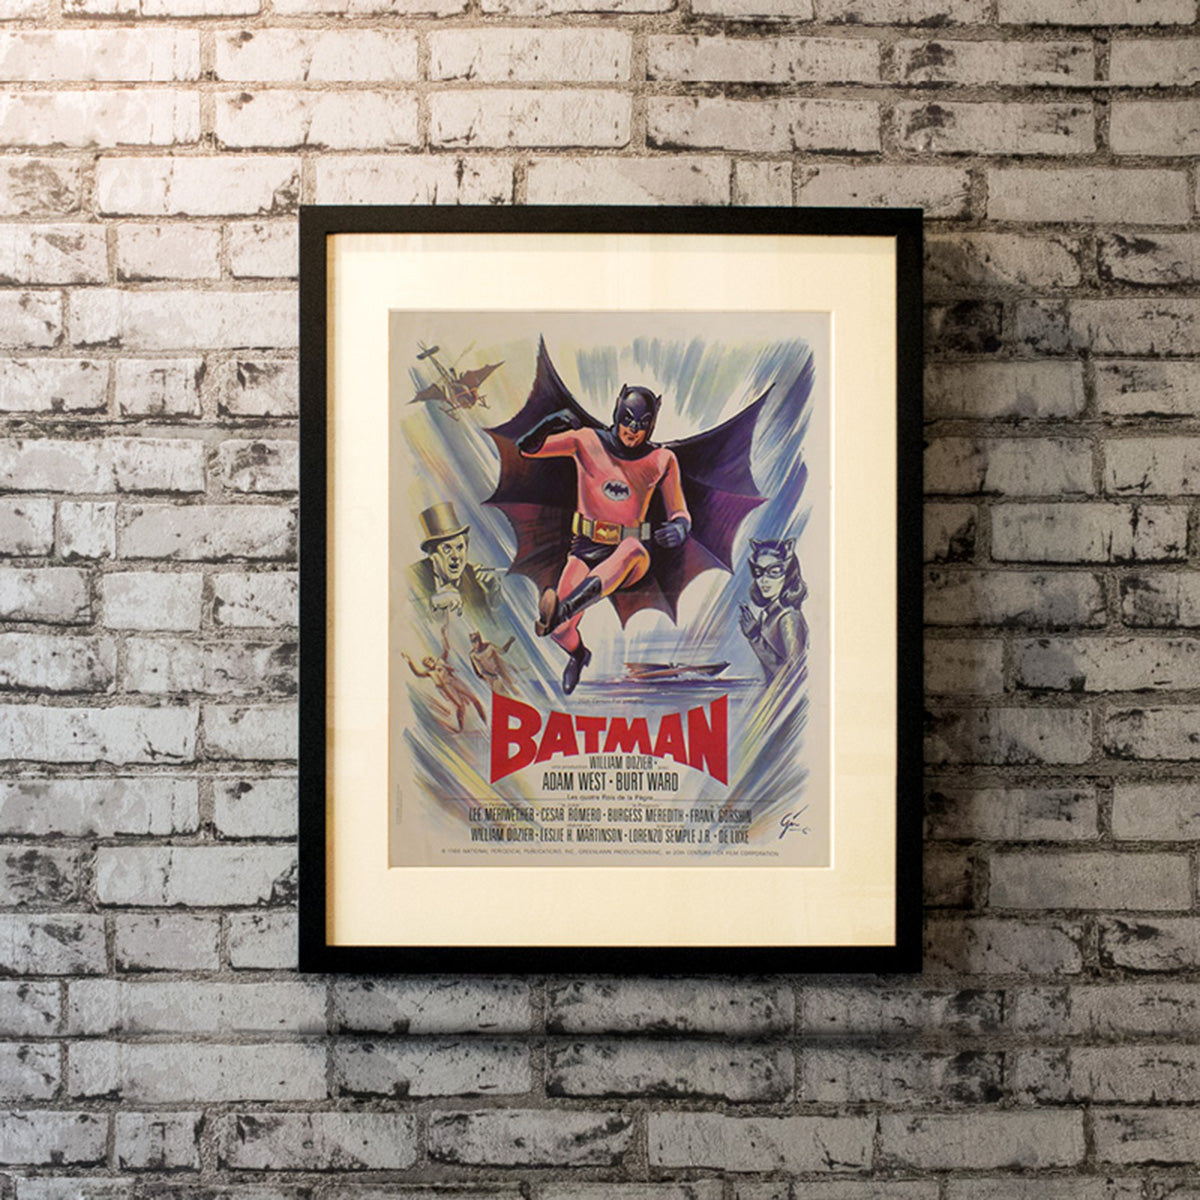 Original Movie Poster of Batman: The Movie (1966)